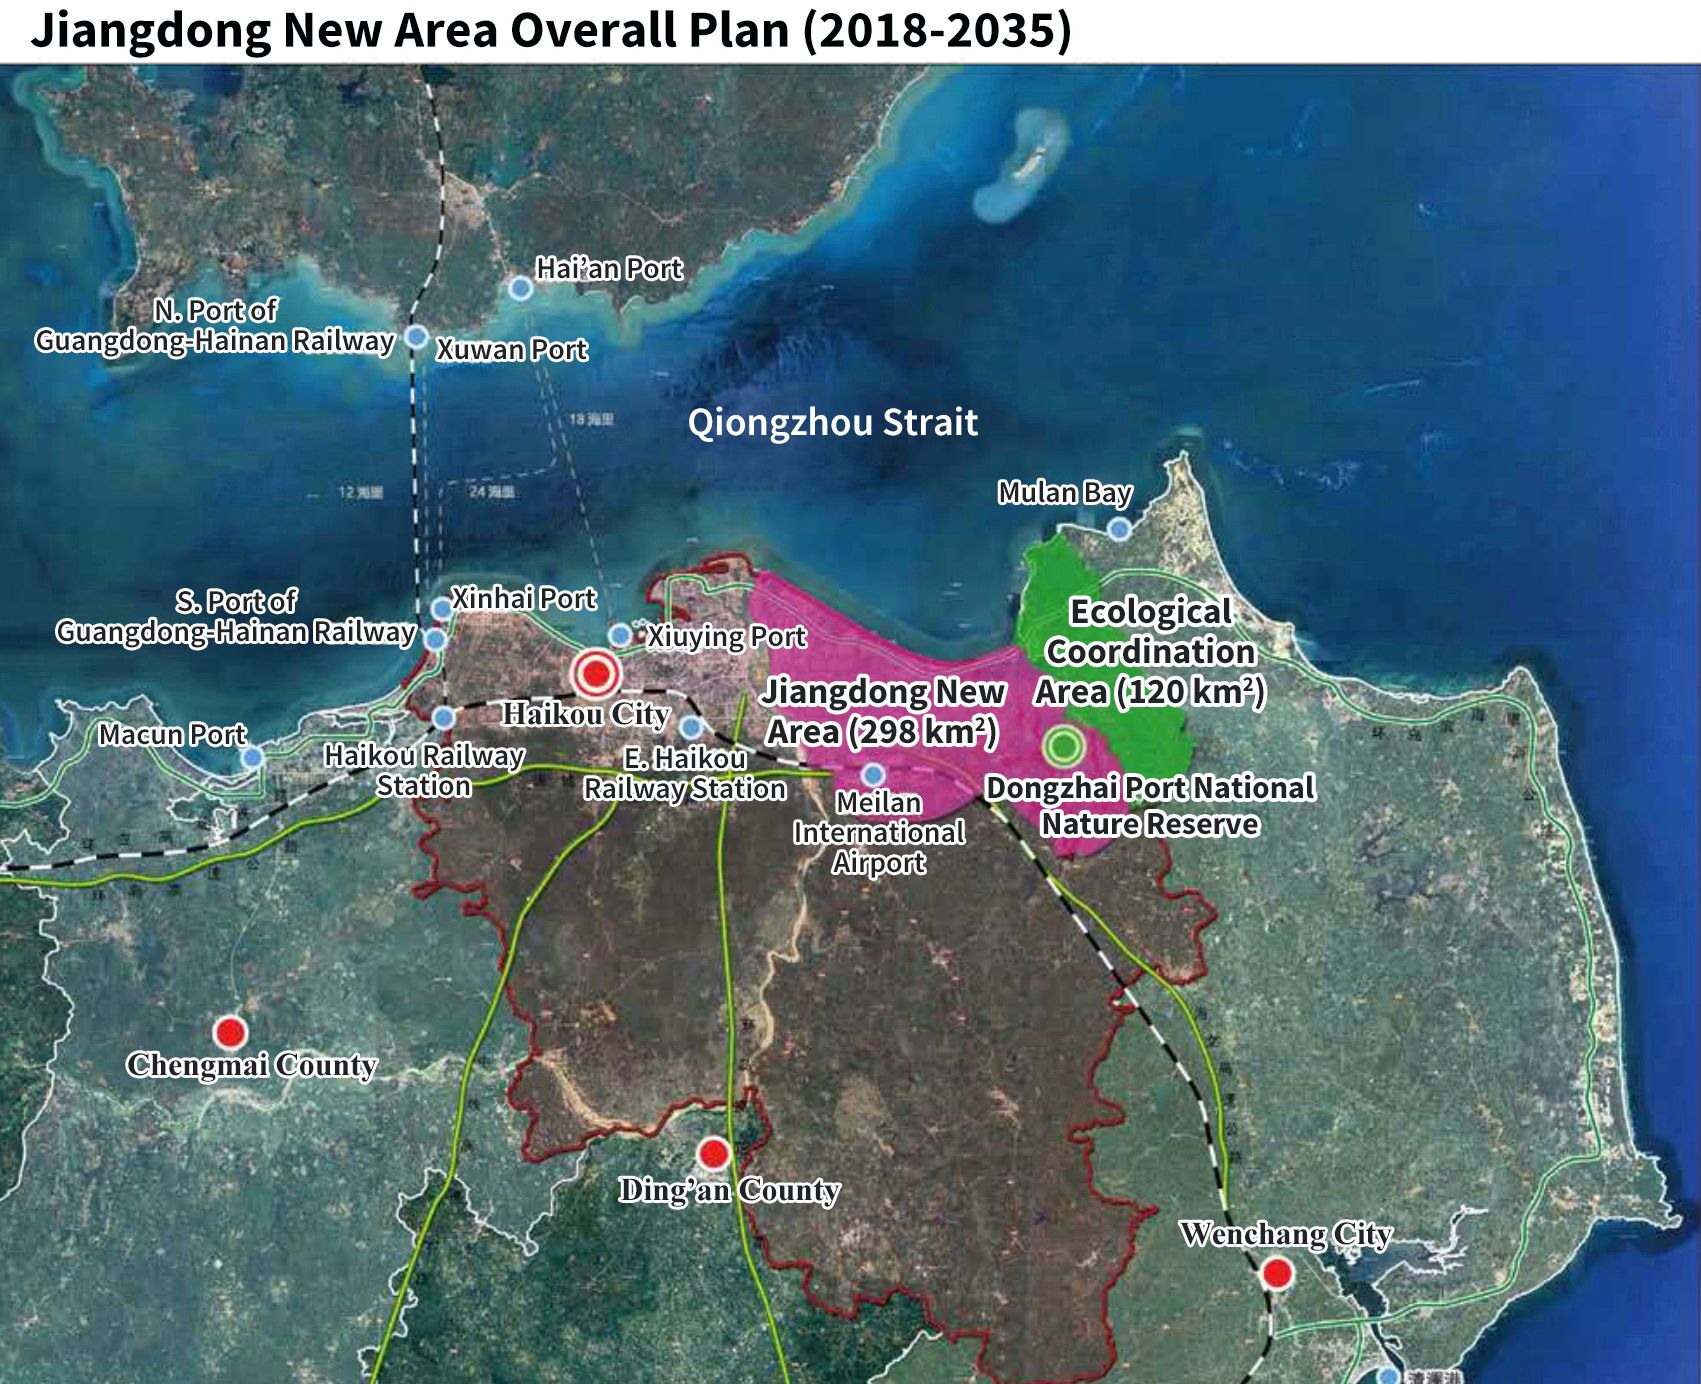 Jiangdong New Area Overall Plan